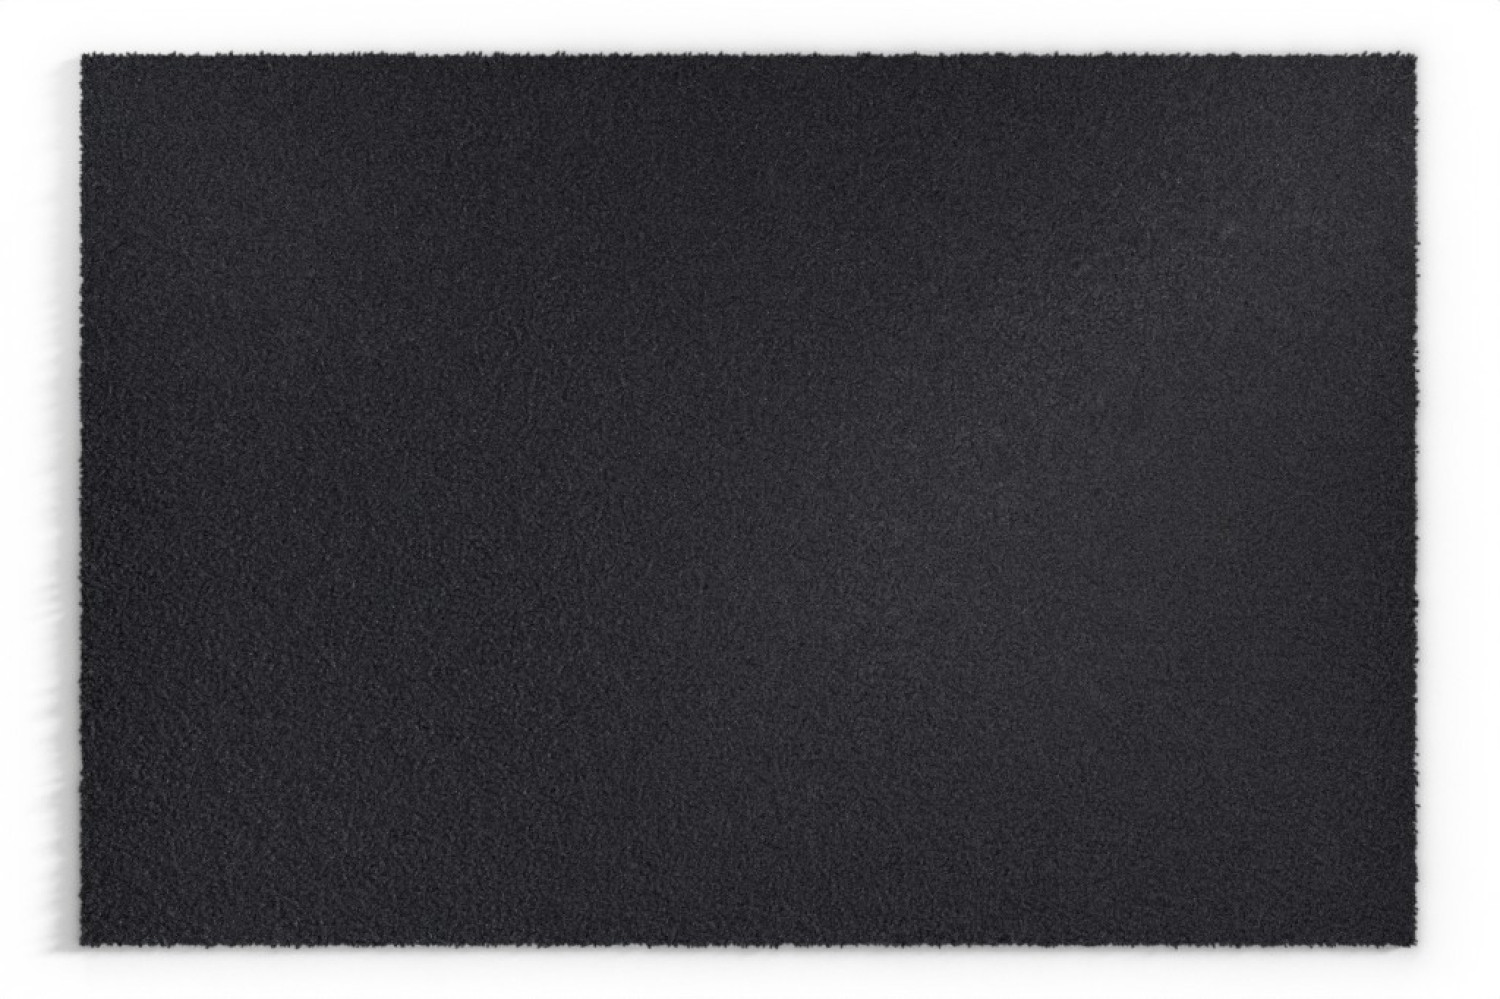 ENTRADA Kokosmatte schwarz 007 200 cm